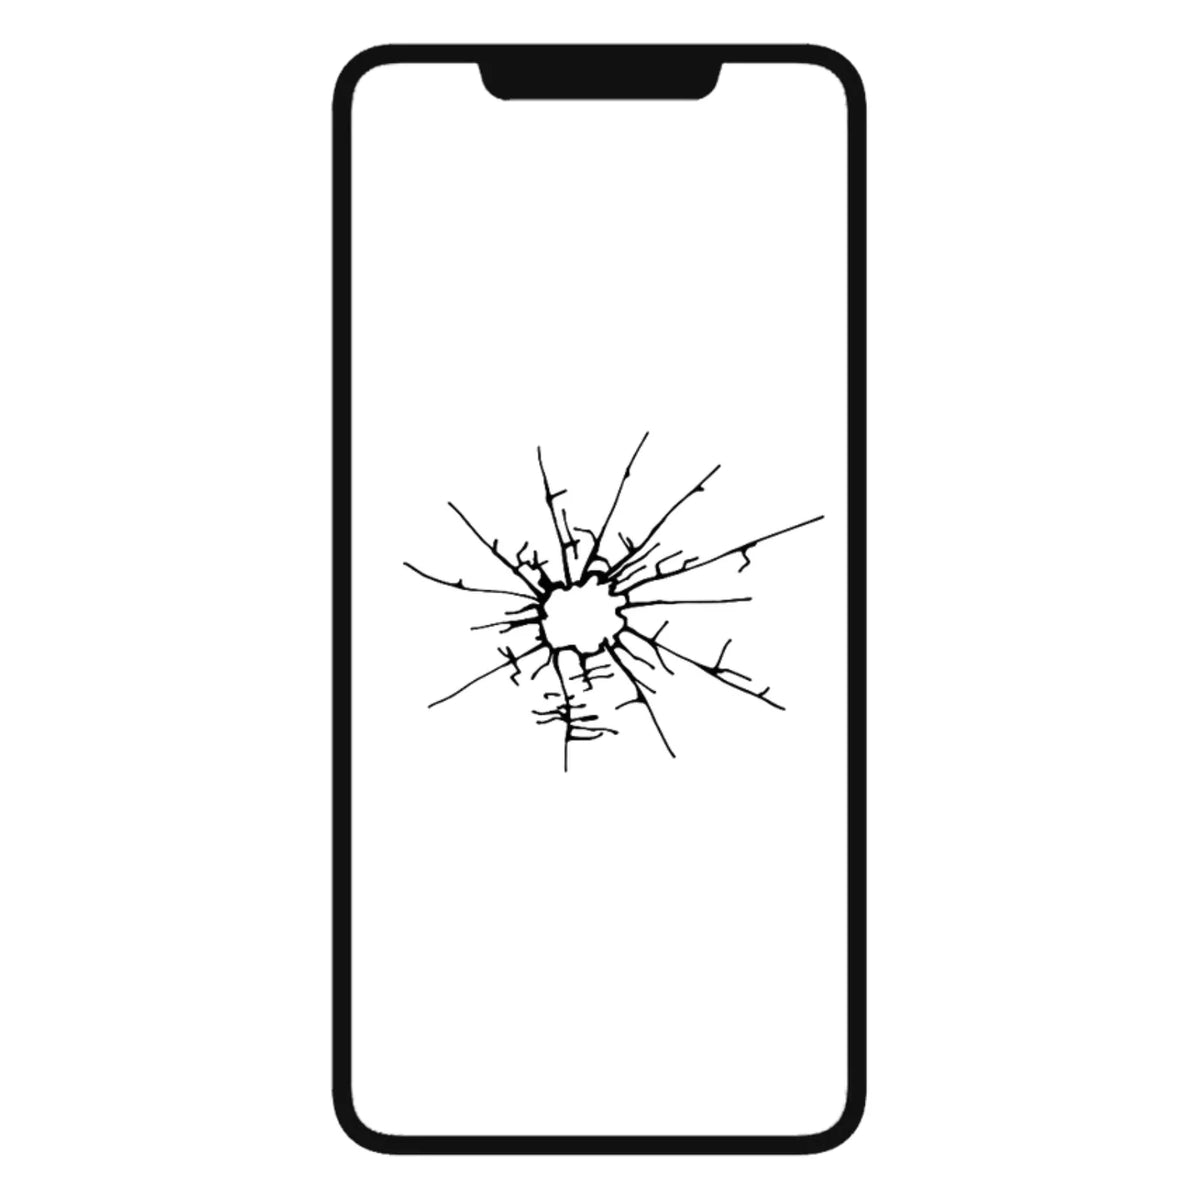 iPhone 12 Mini Screen Repair